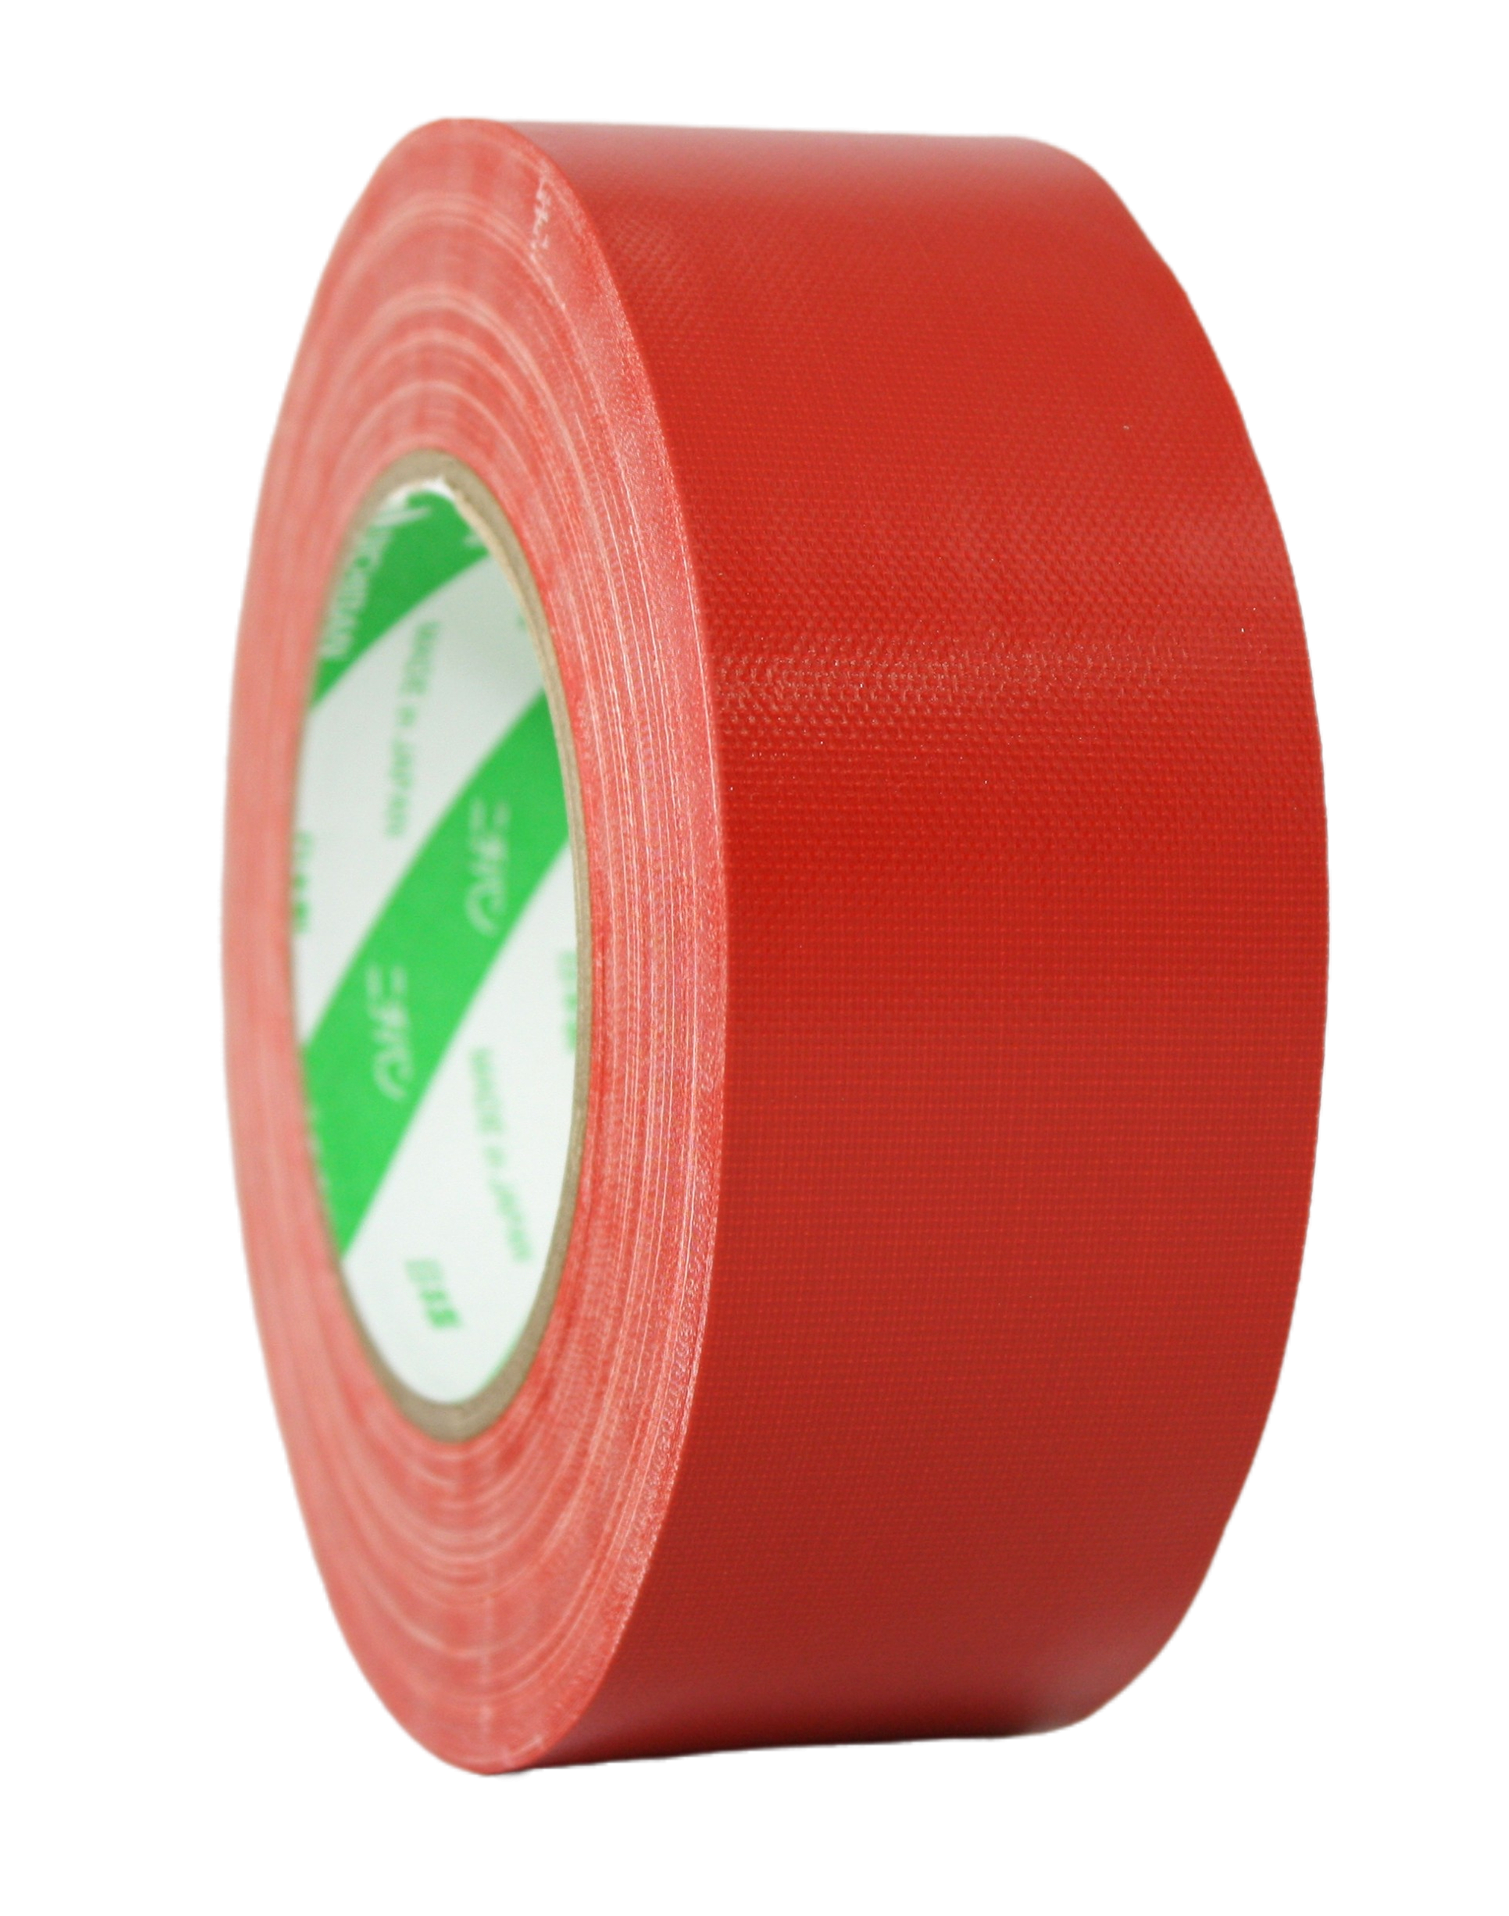 Nichiban Red Gaff Tape, 2" roll, side view